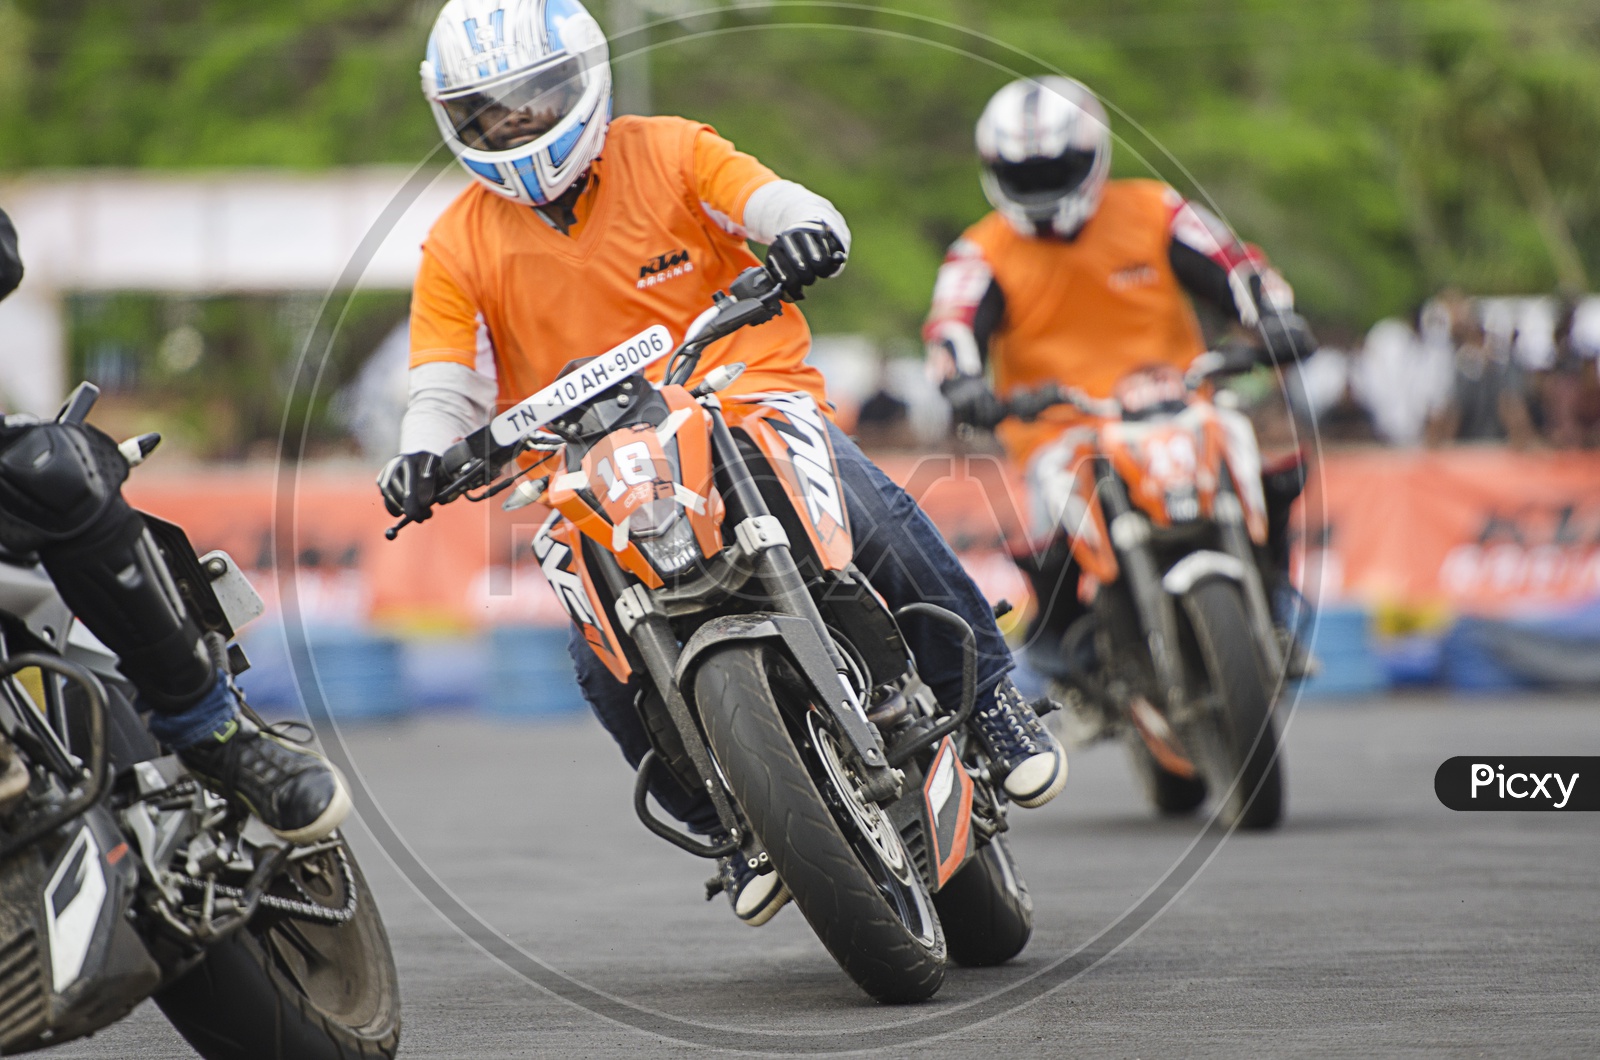 Riders Riding KTM Bikes on Tracks At Orange Day KTM Event in Chennai